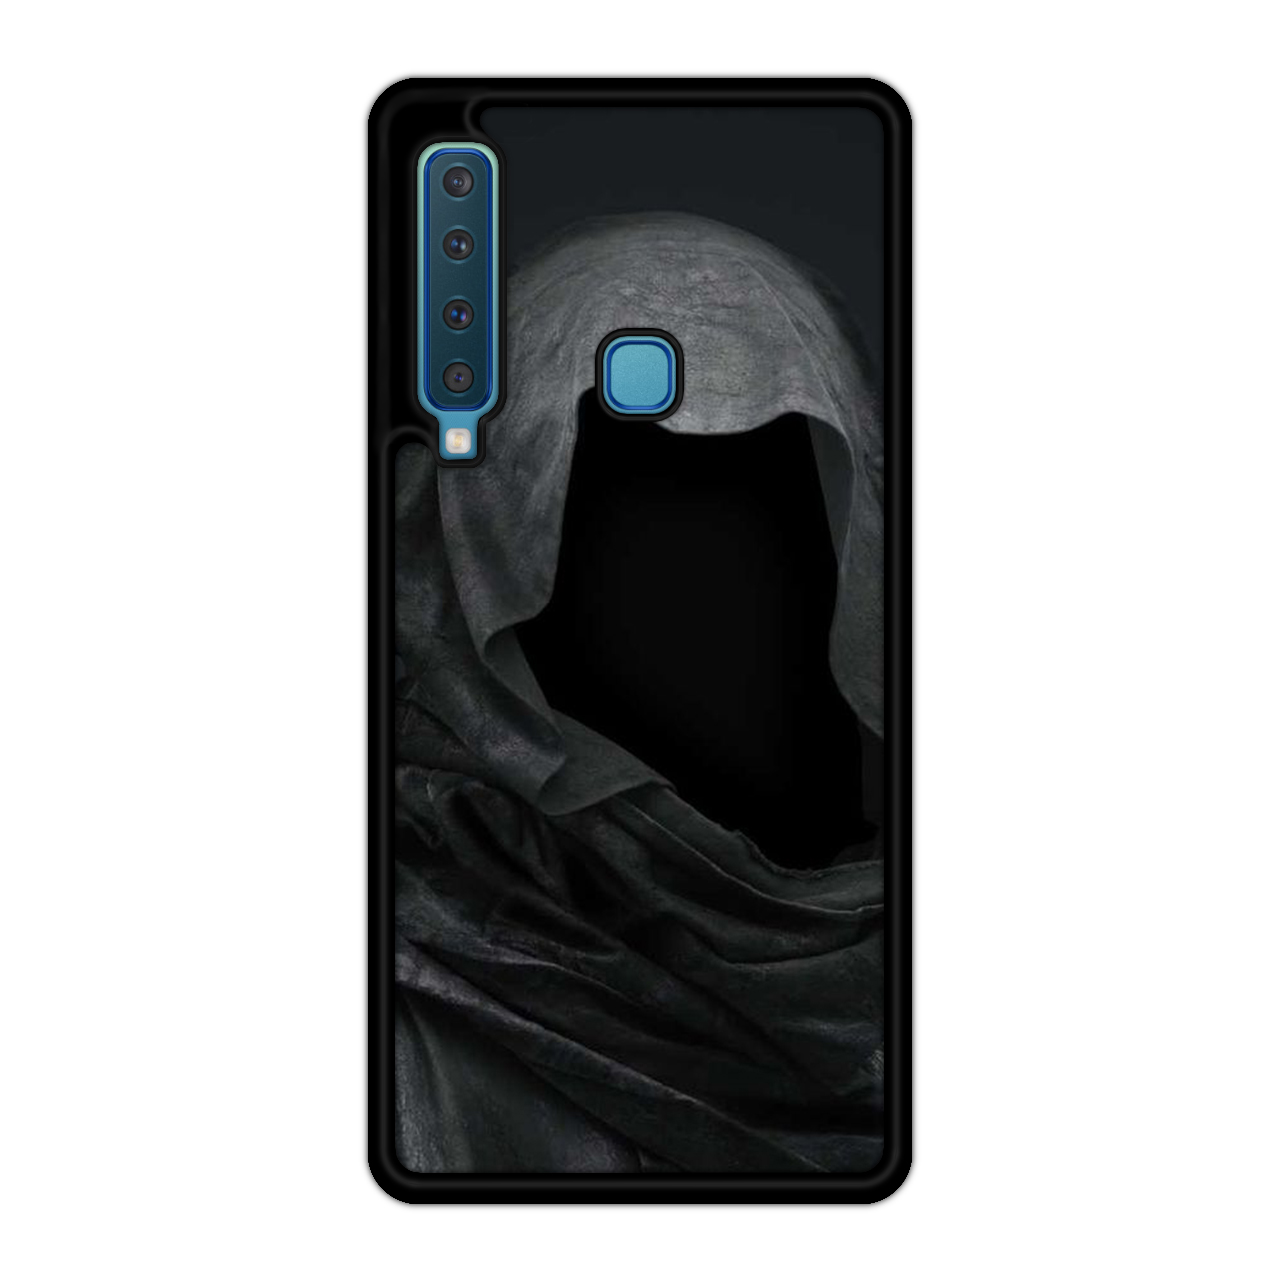 کاور آکام مدل Aanin2295 مناسب برای گوشی موبایل سامسونگ Galaxy A9 2018